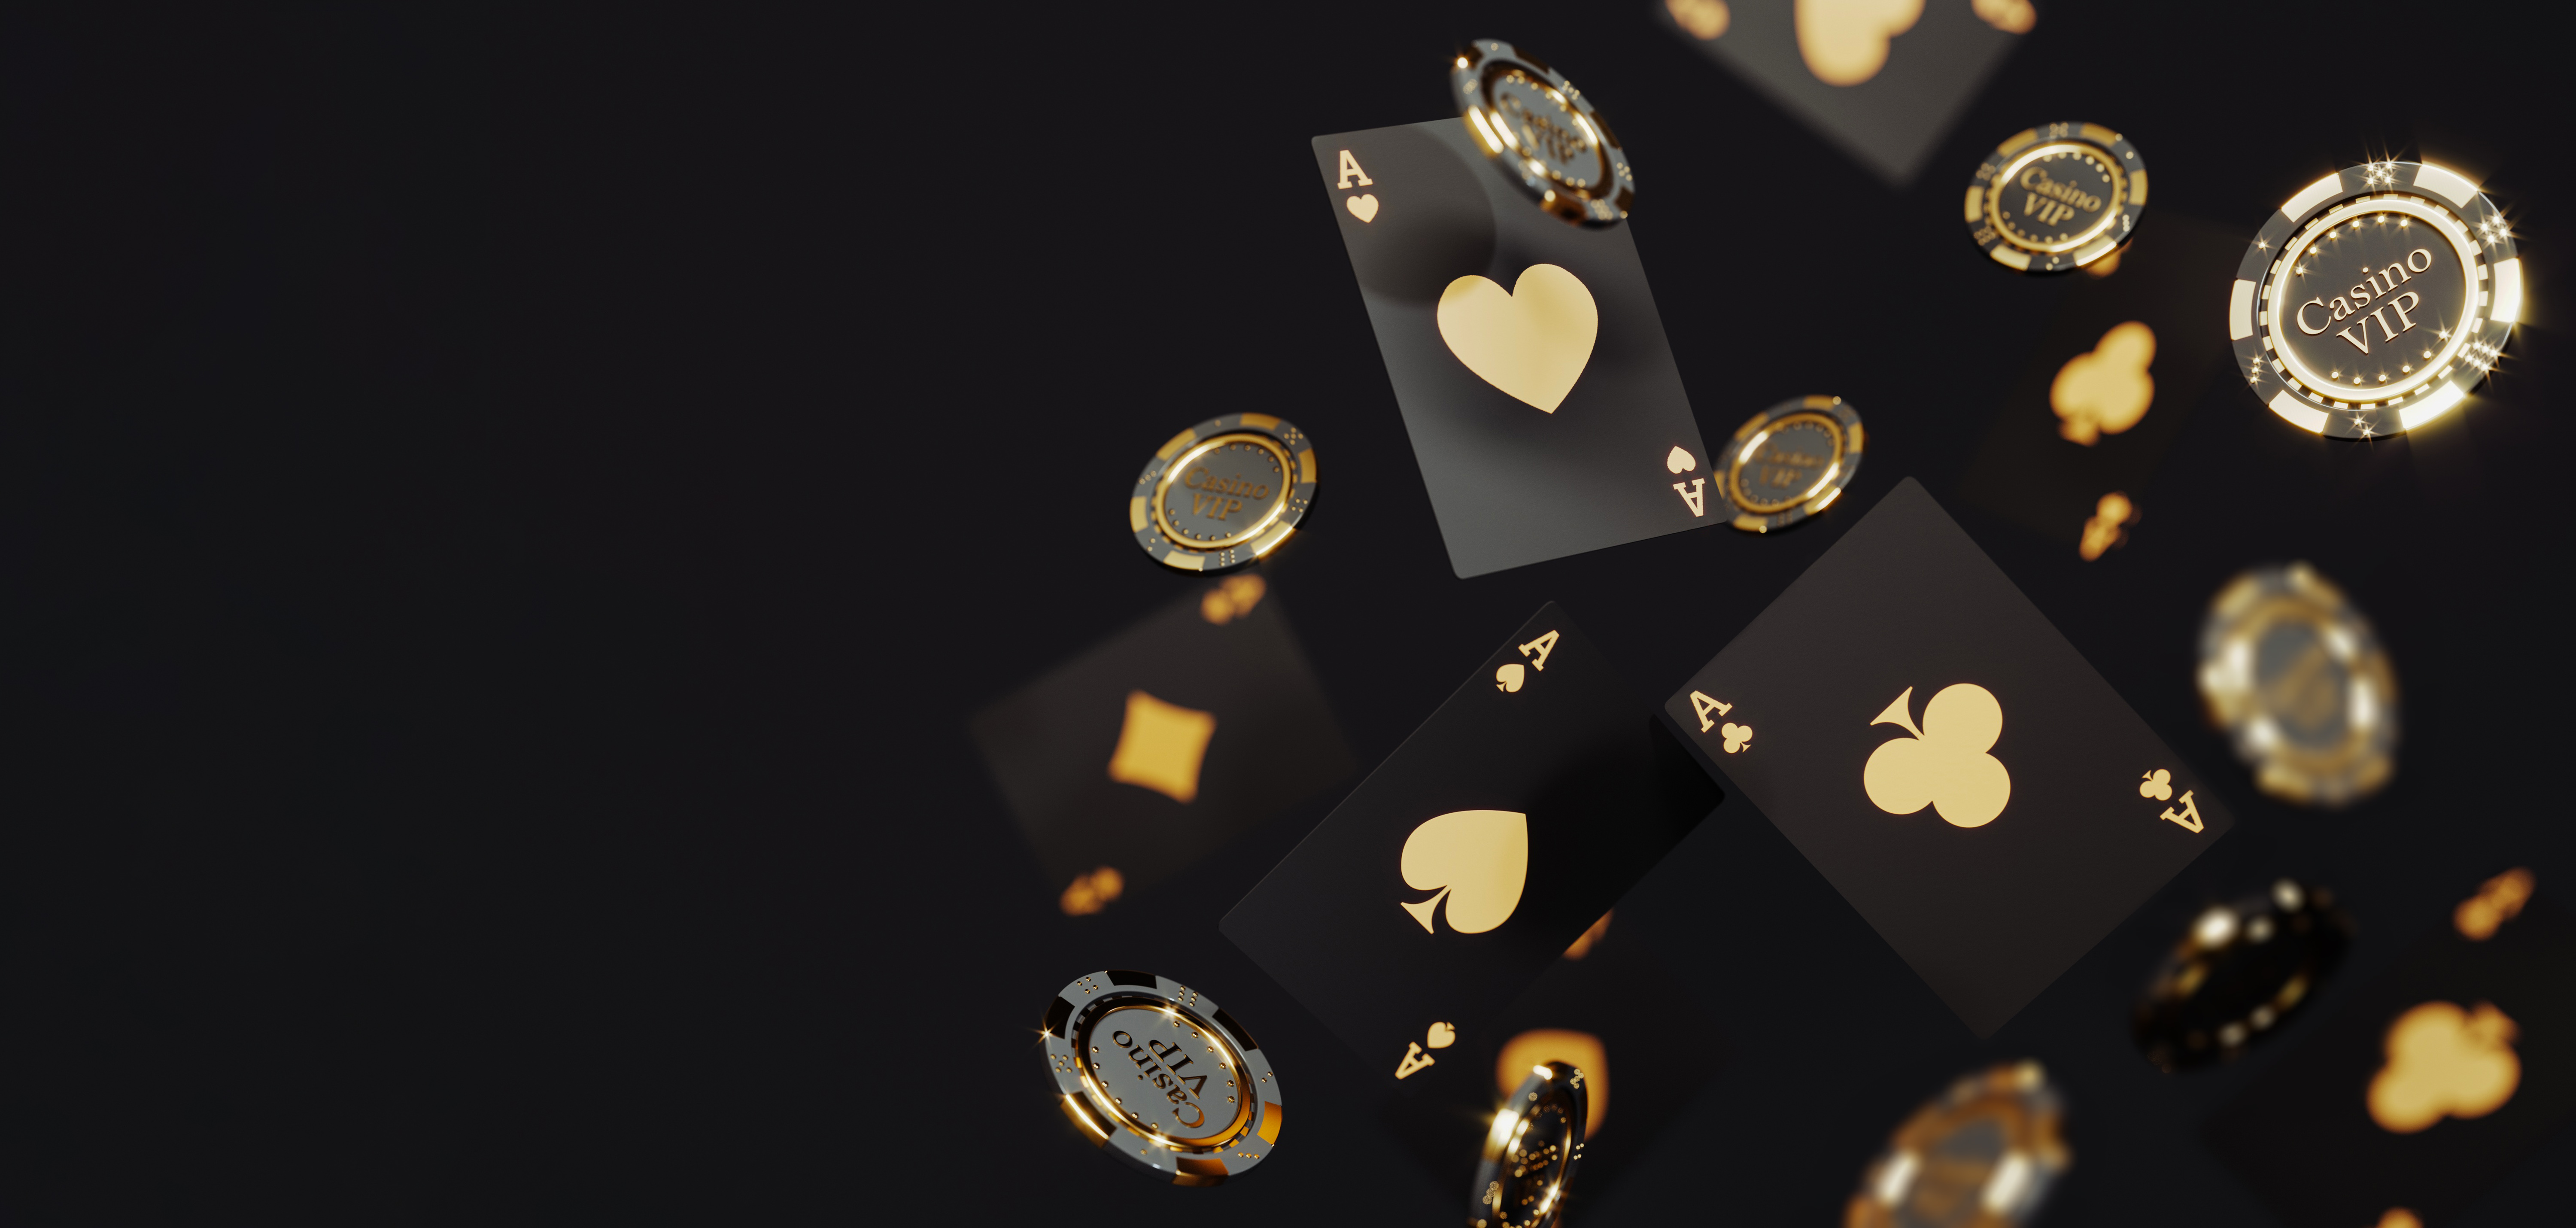 luxury-casino-golden-chips-cards-poker-chips-falling-premium-photo (1).jpg (2.40 MB)